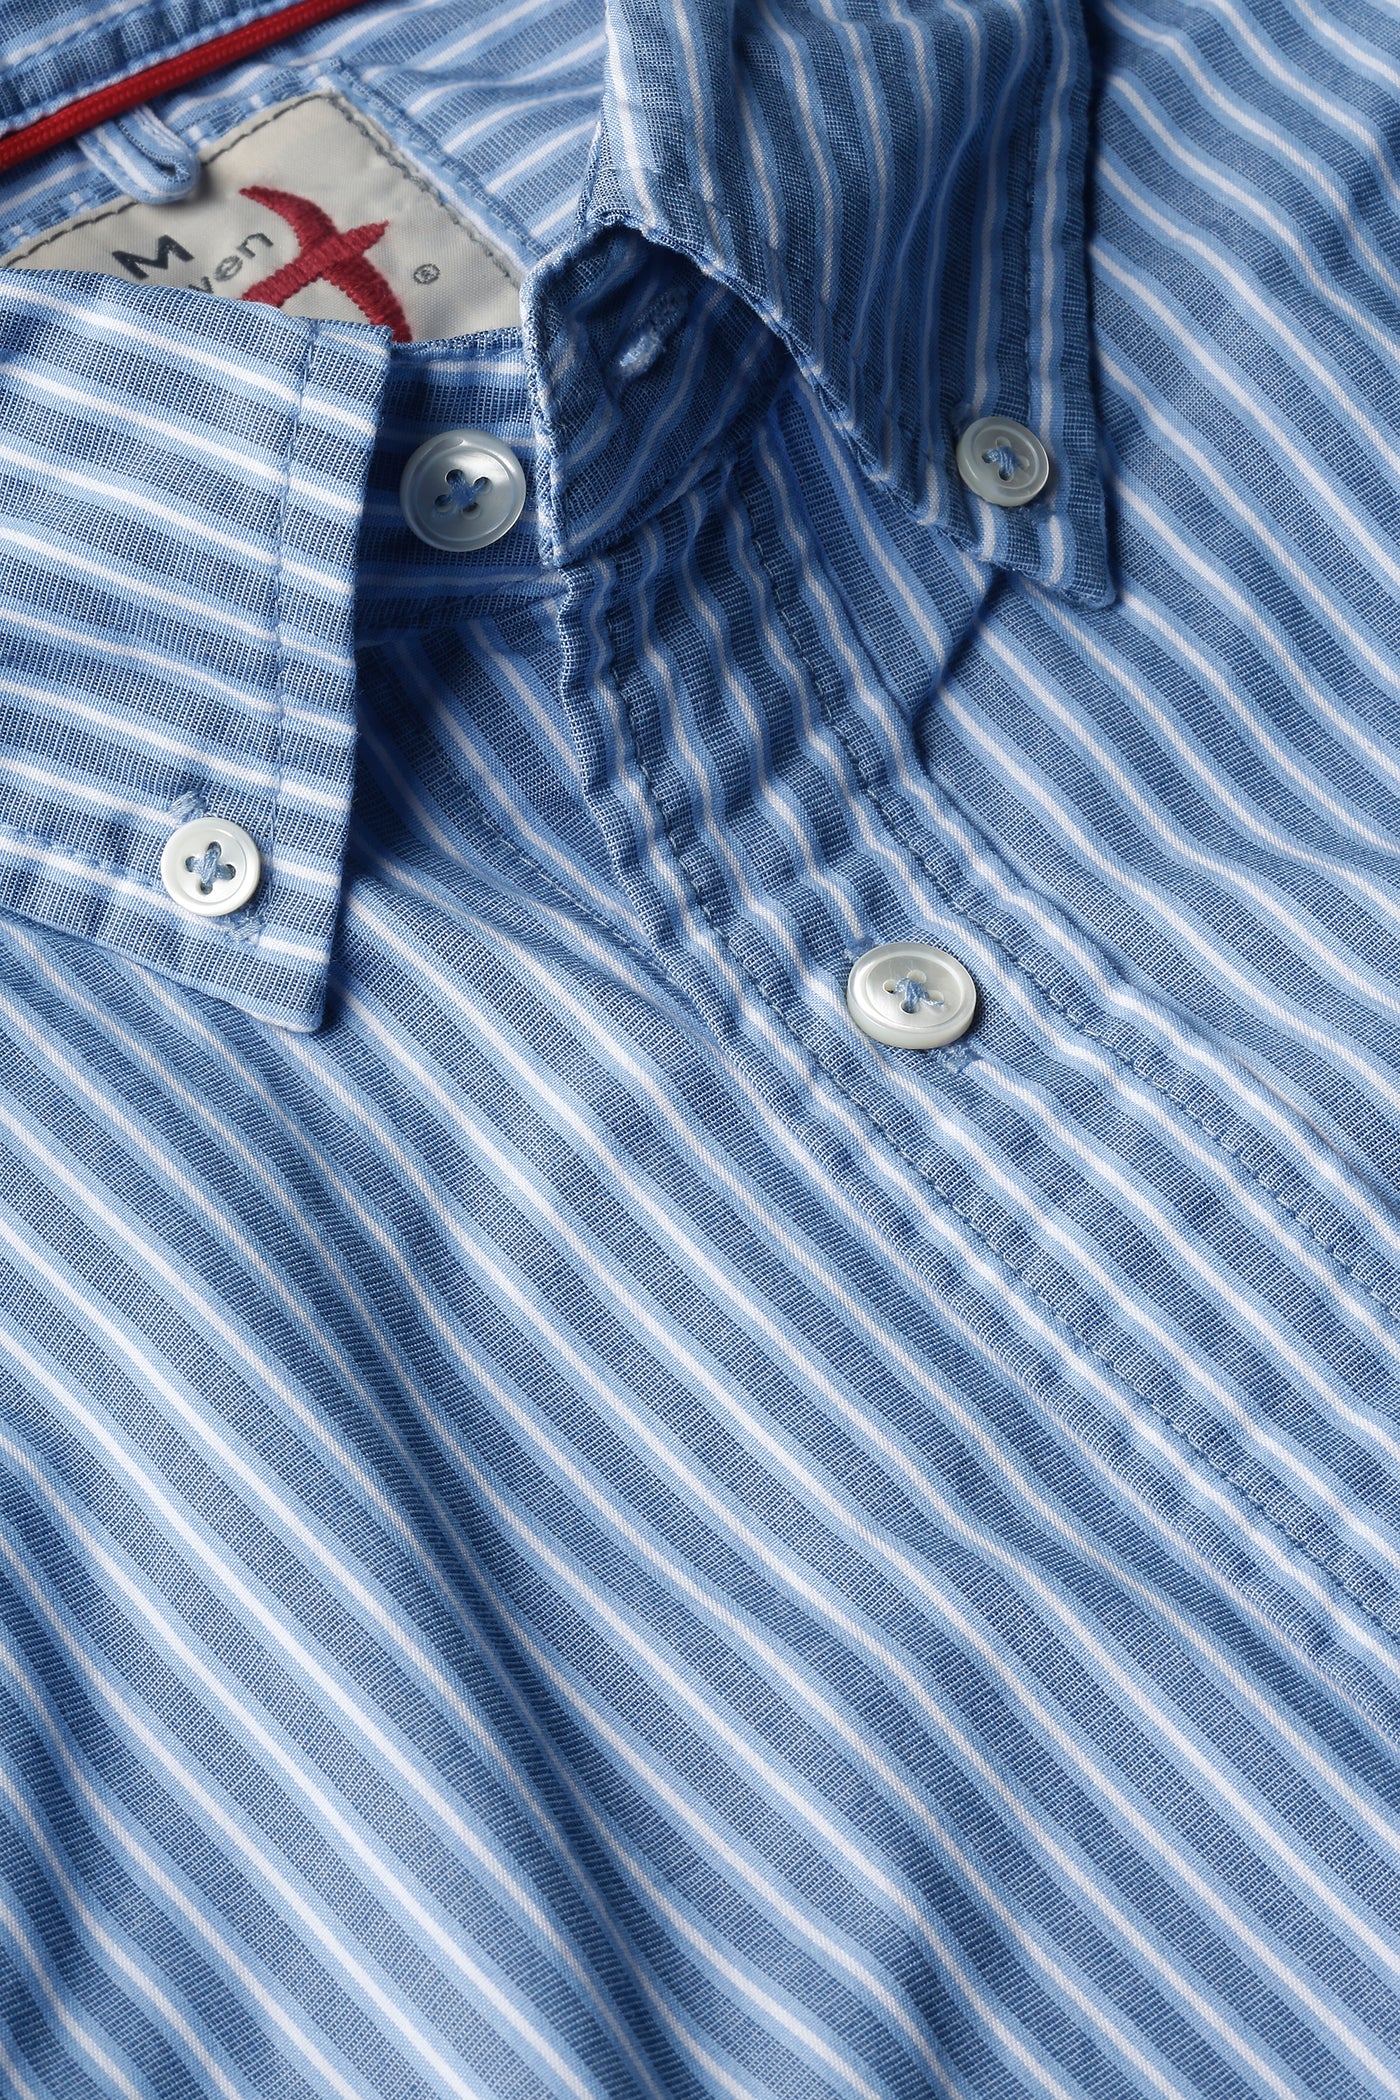 Relwen Highland Blues Sport Shirt in Blue White Stripe